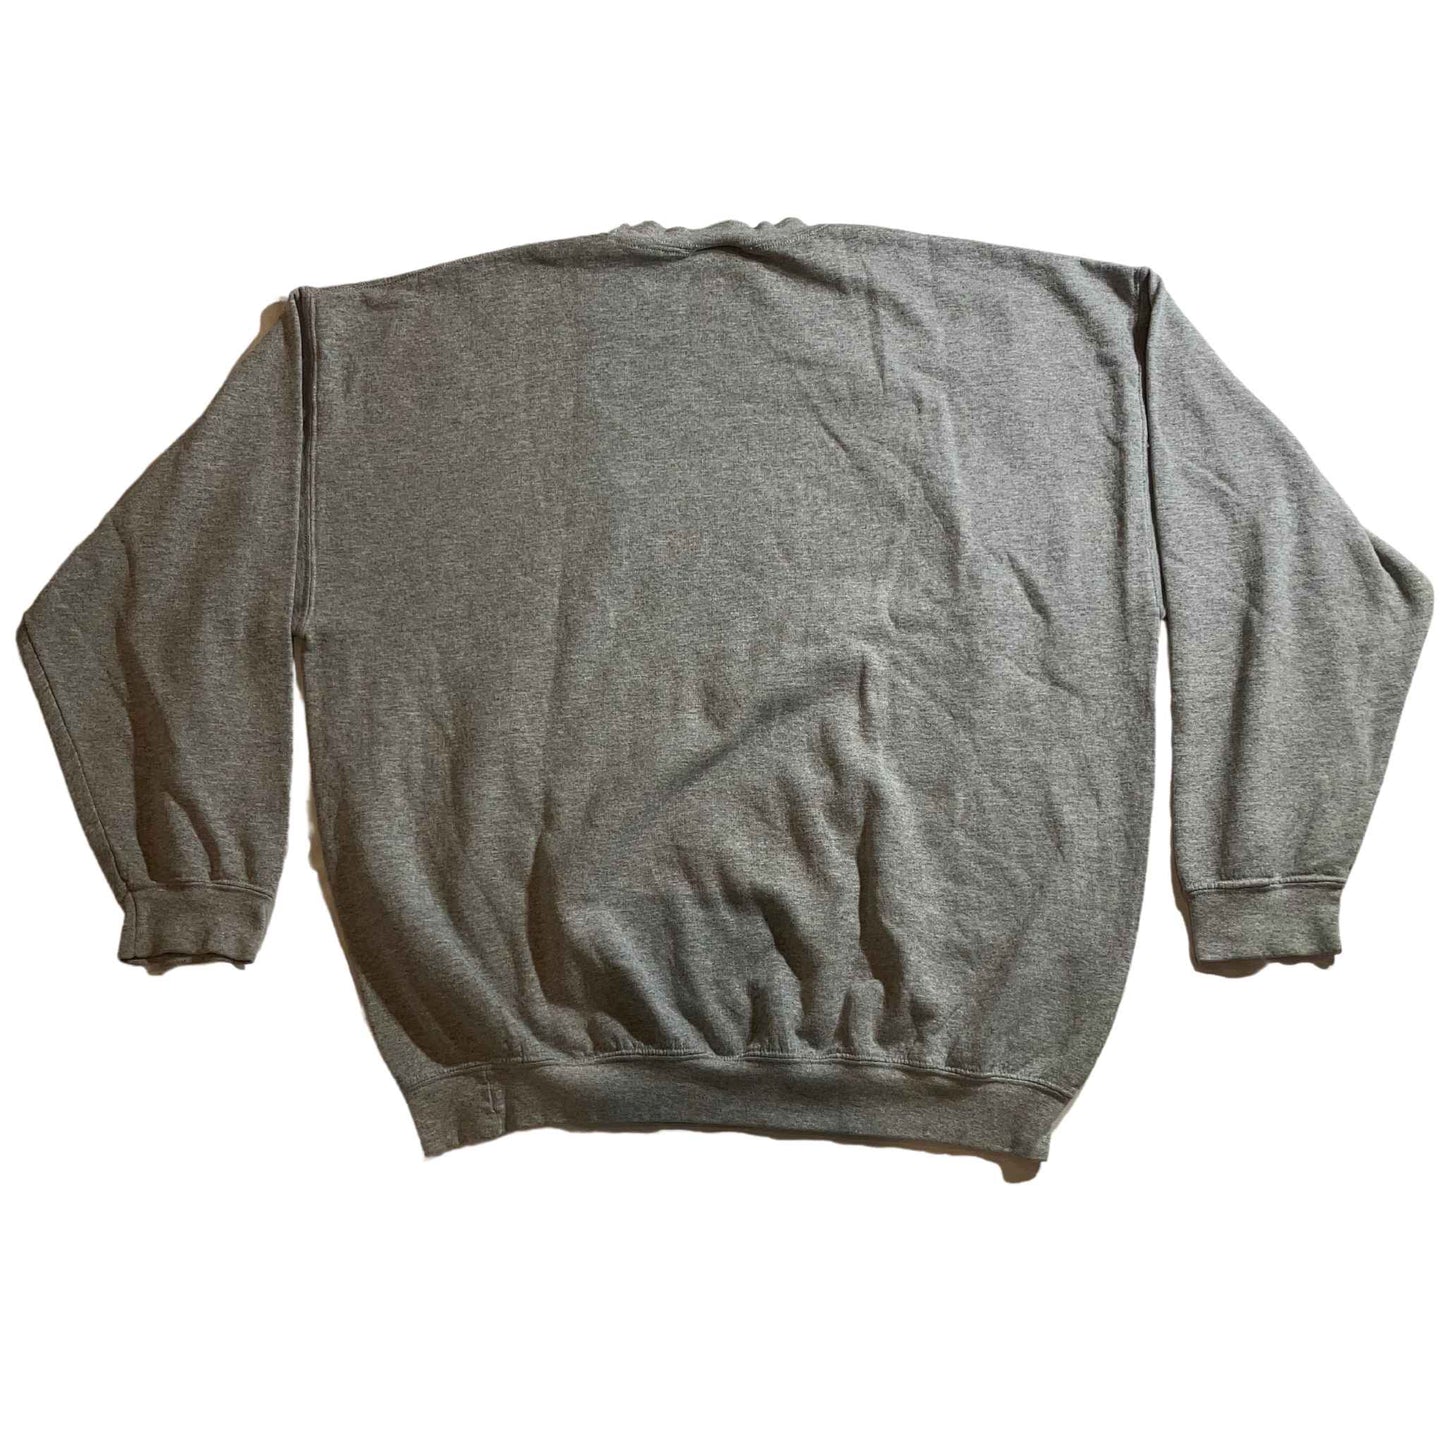 Sacred Heart University: American College Sweatshirt | Size 2XL